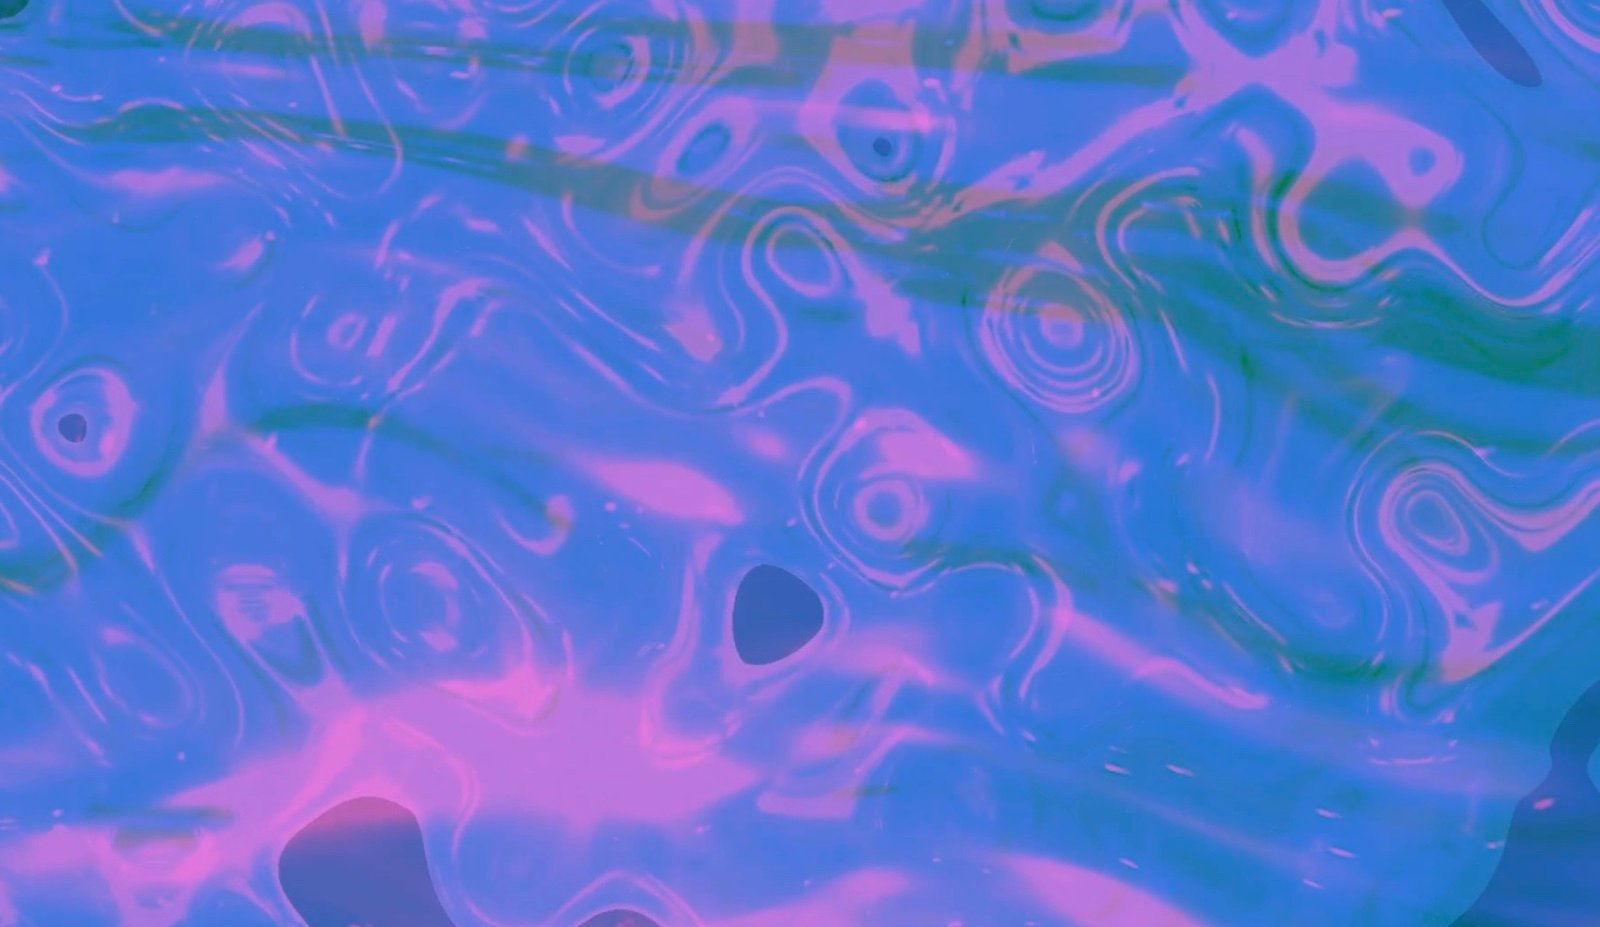 Swirls of blue and purple that look like viscous liquid.